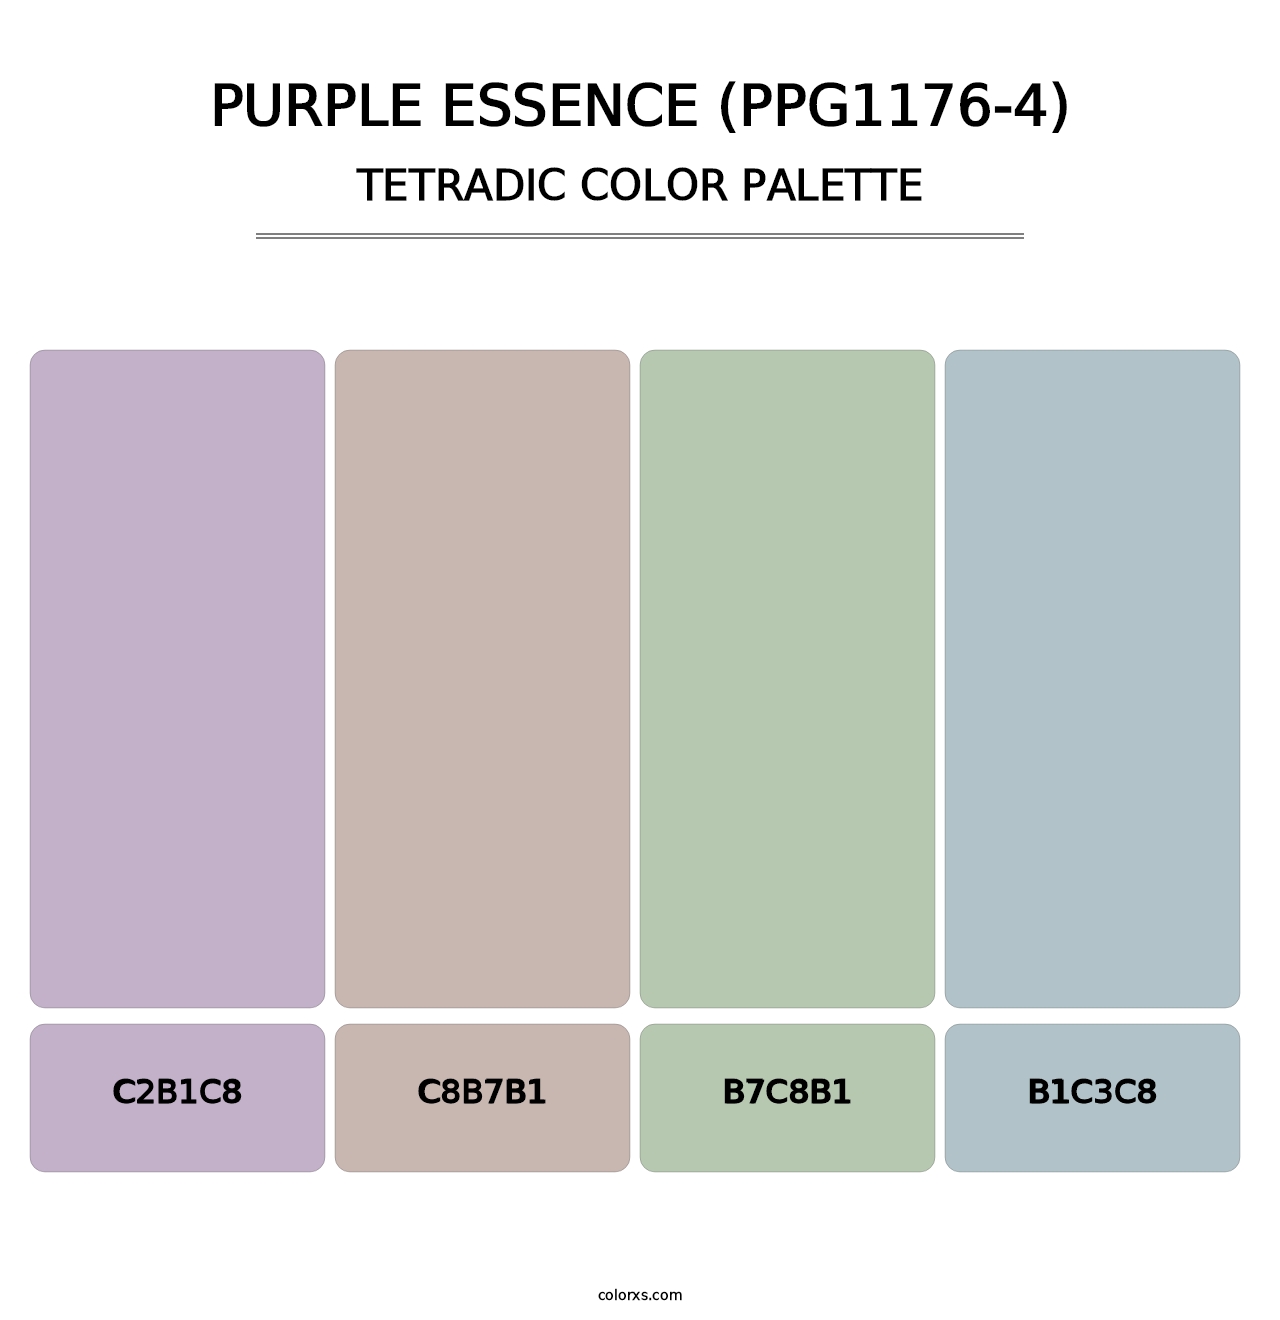 Purple Essence (PPG1176-4) - Tetradic Color Palette